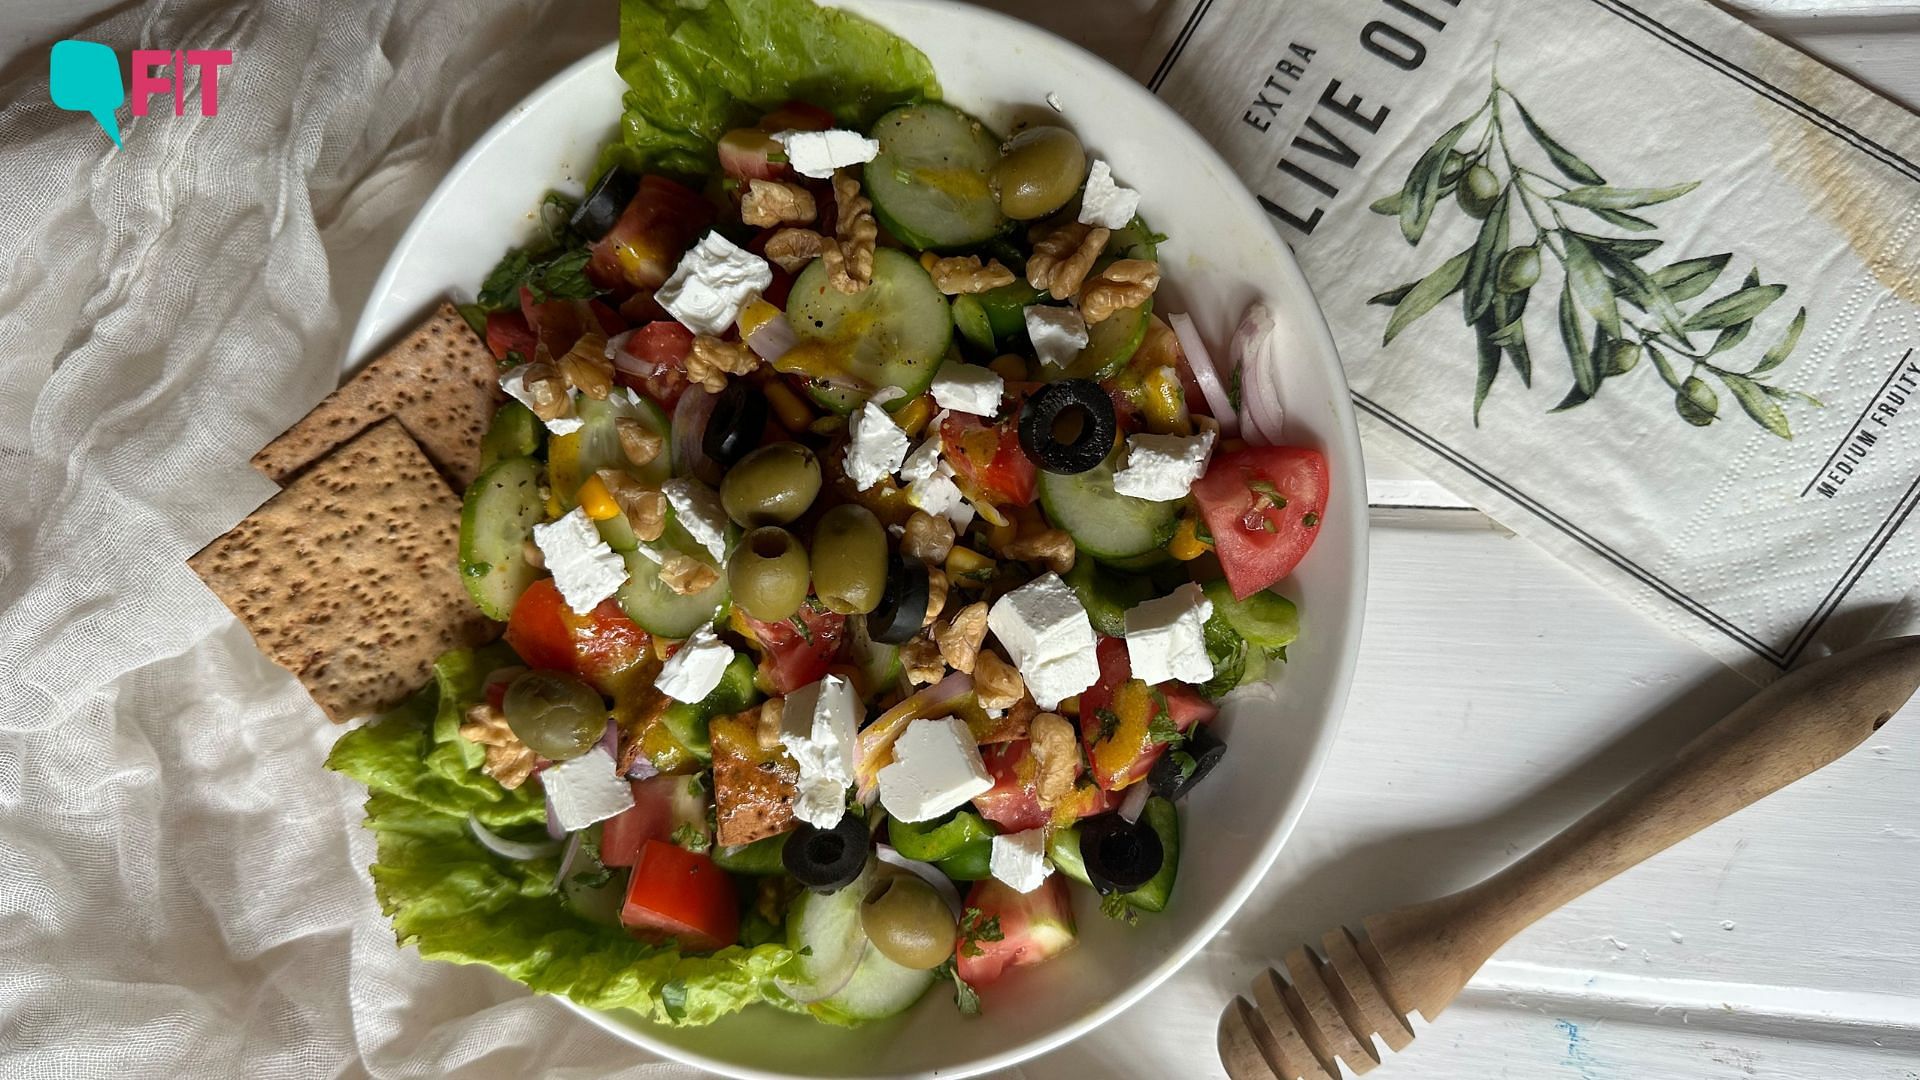 <div class="paragraphs"><p>A spruced up Greek salad</p></div>